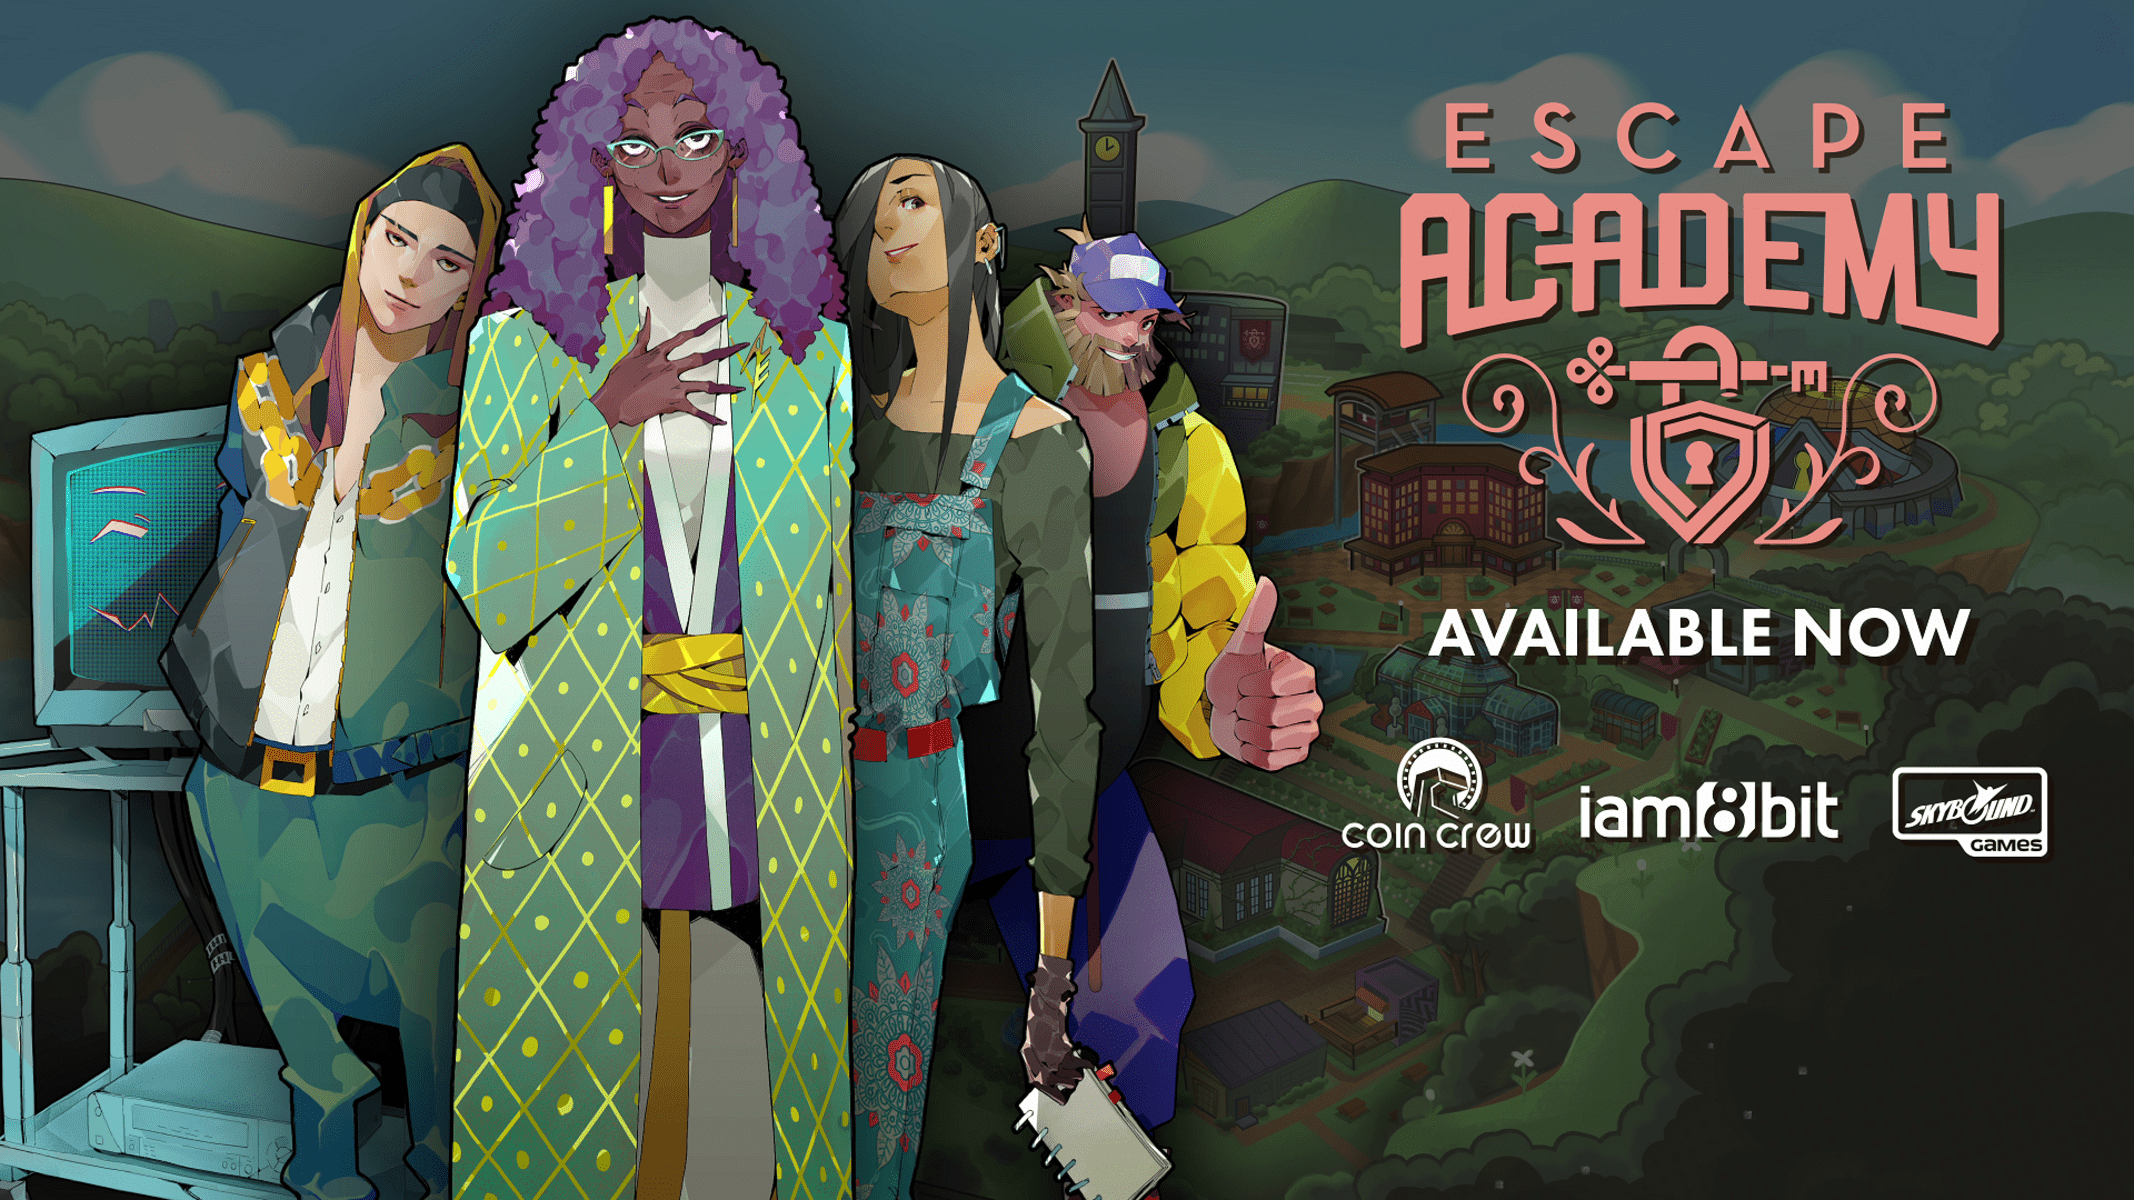 escape academy video fbjs8 1